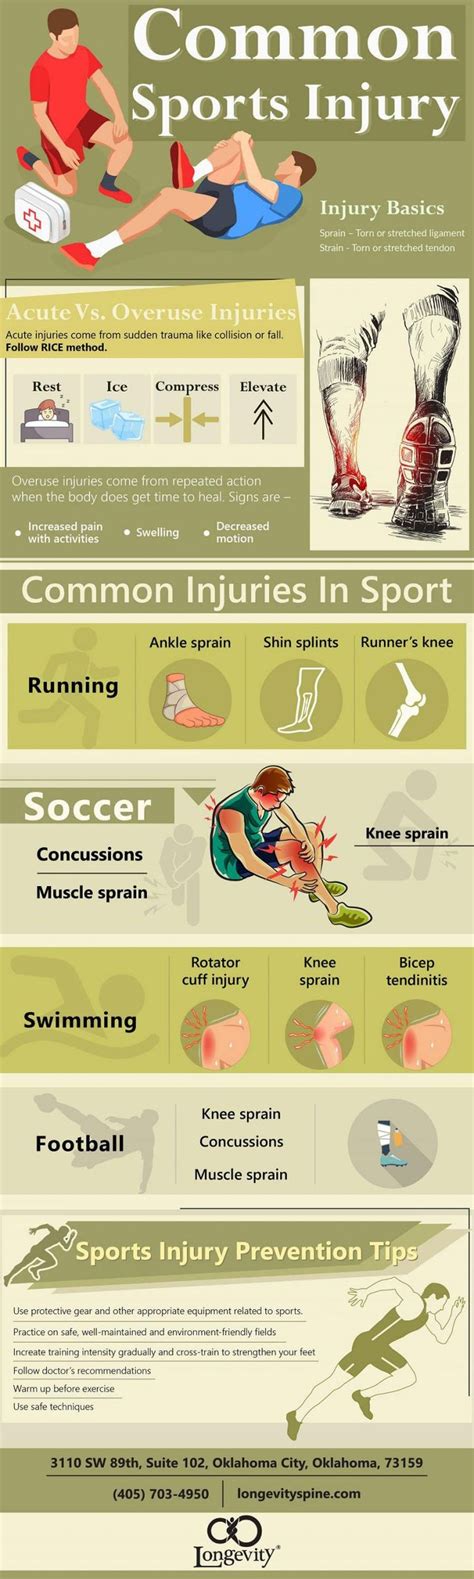 Common Sports Injuries Infographic Sports Injury Infographic Injury